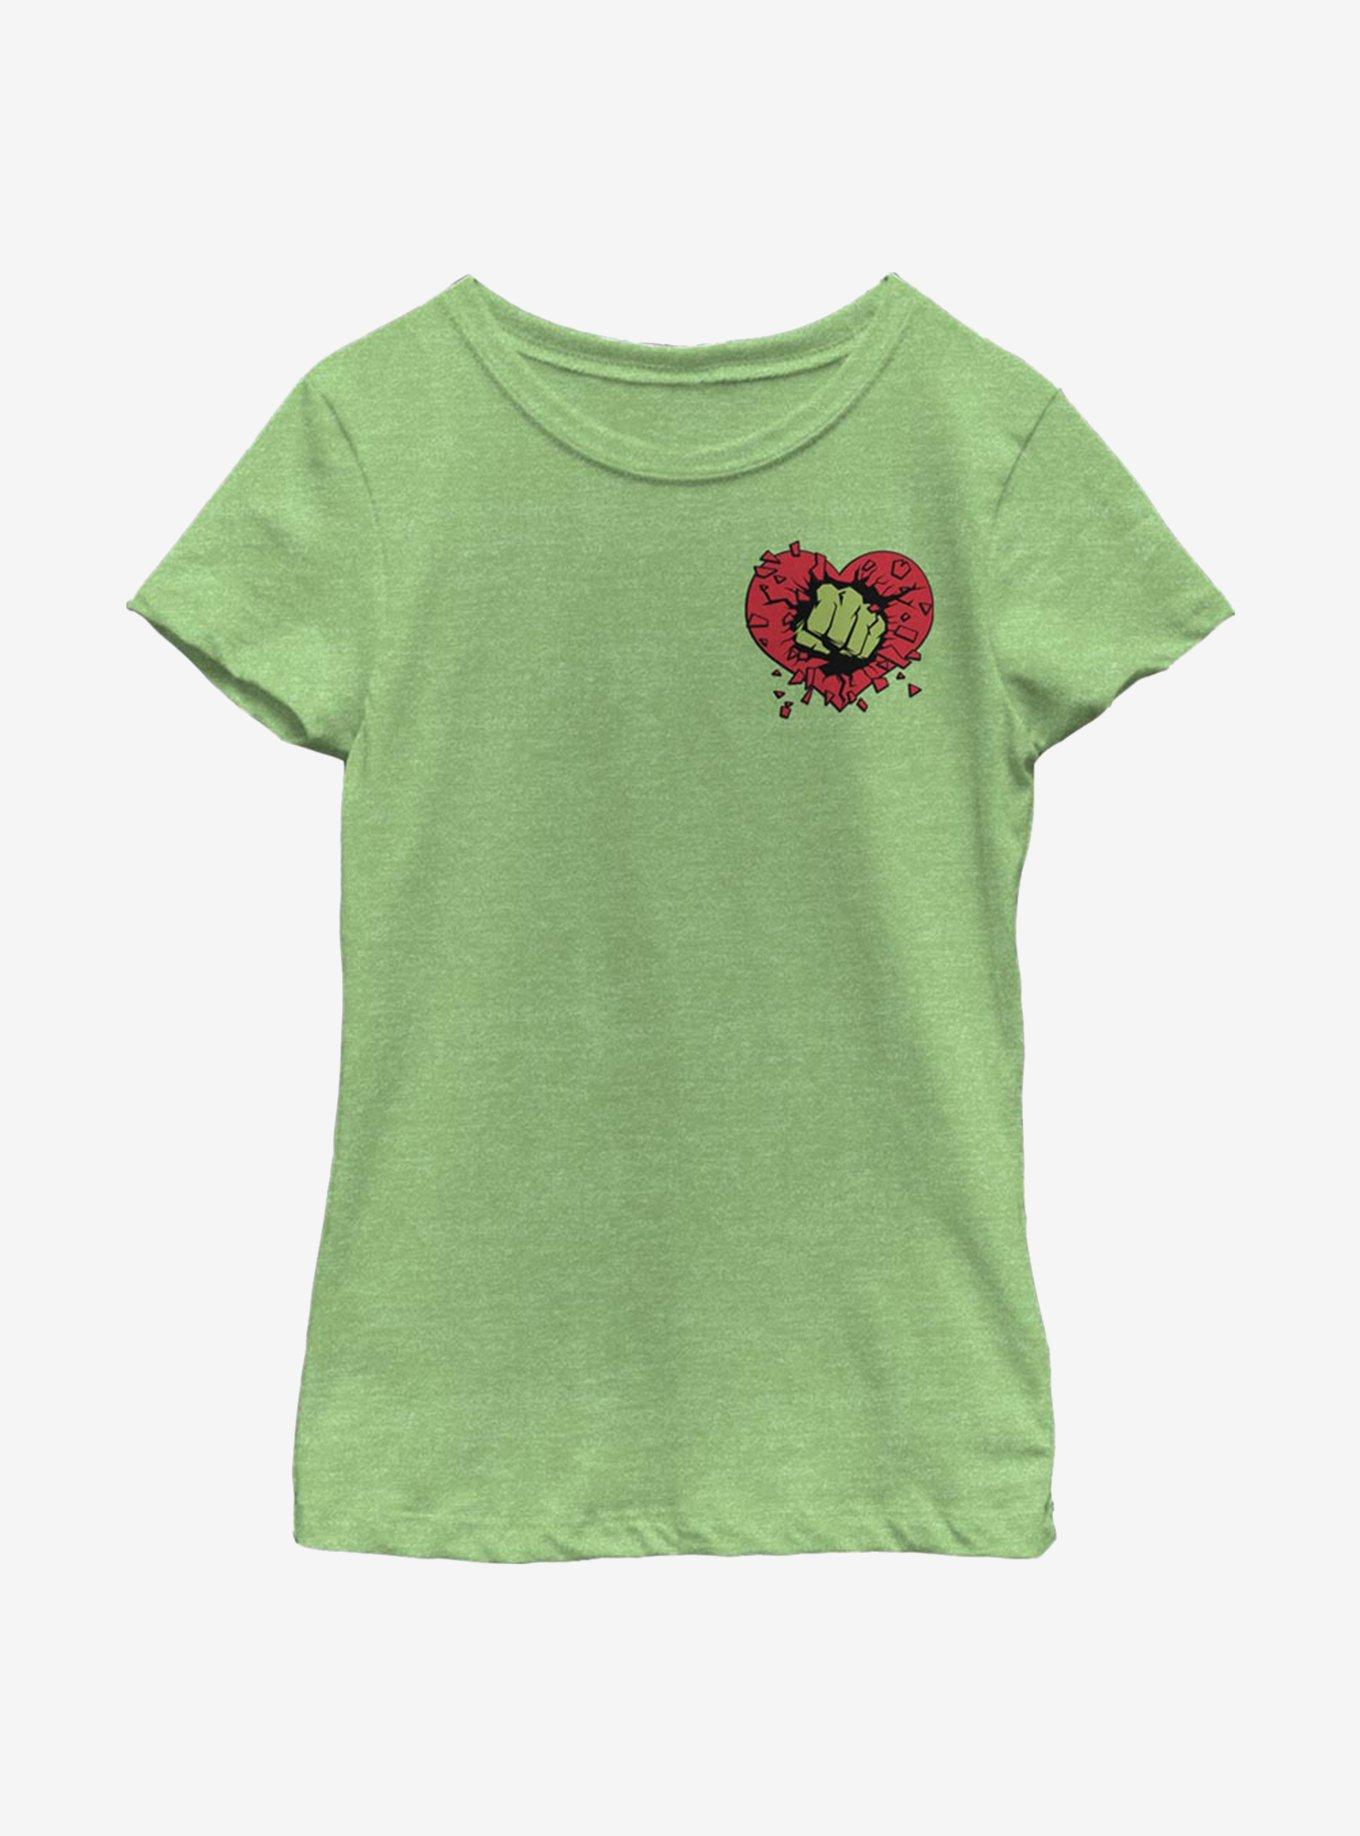 Marvel Hulk Smash Heart Youth Girls T-Shirt, GRN APPLE, hi-res